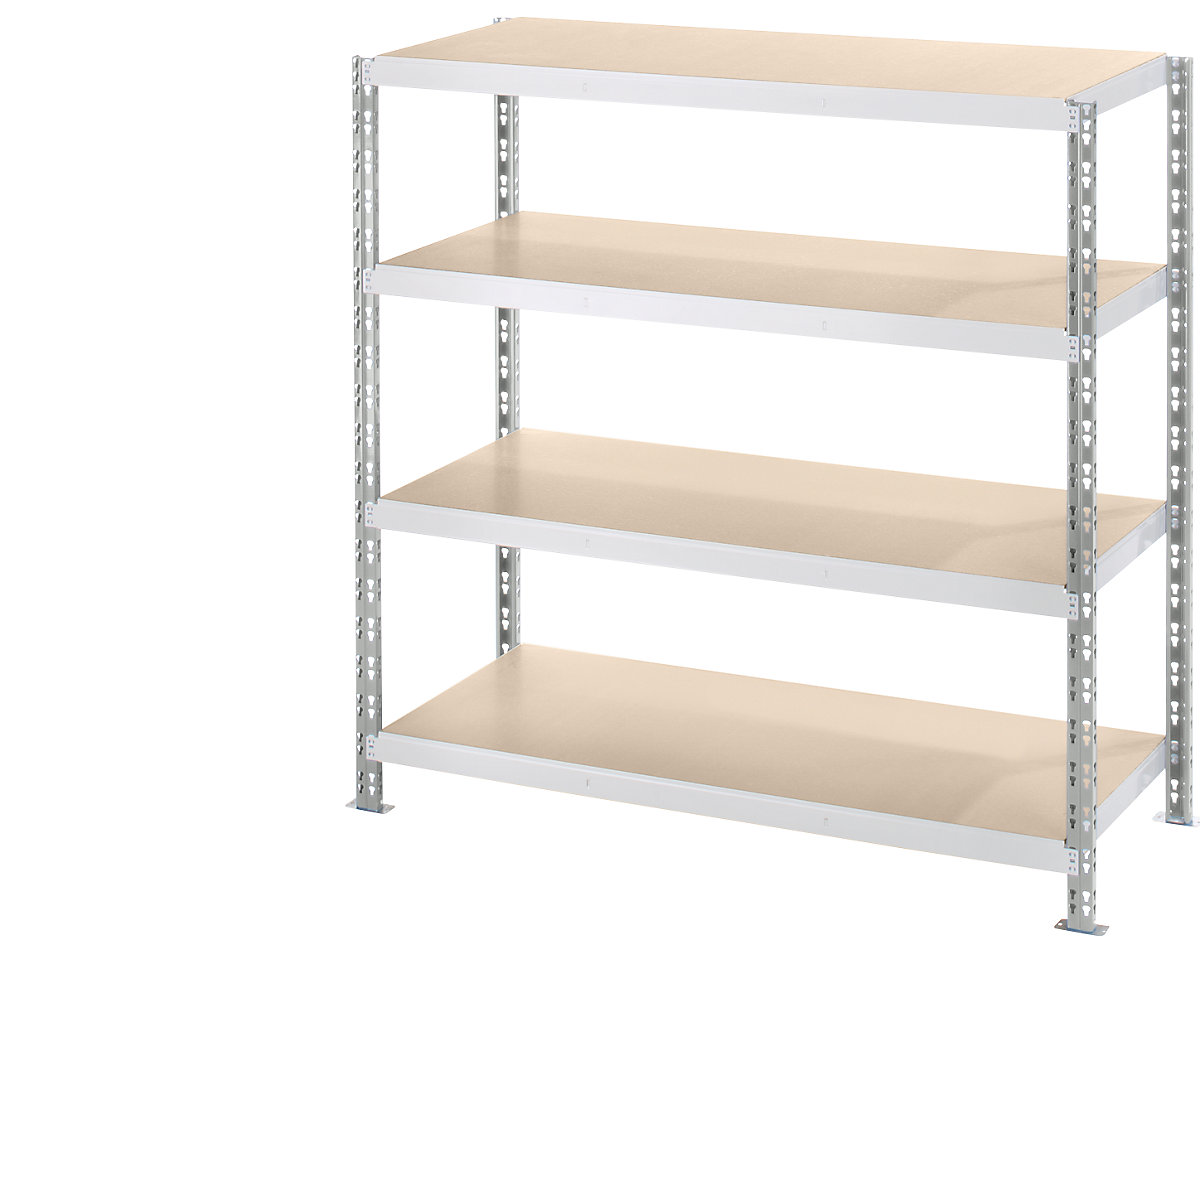 Wide span boltless shelf unit with moulded chipboard shelves, depth 700 mm, standard shelf unit, HxW 1508 x 1550 mm